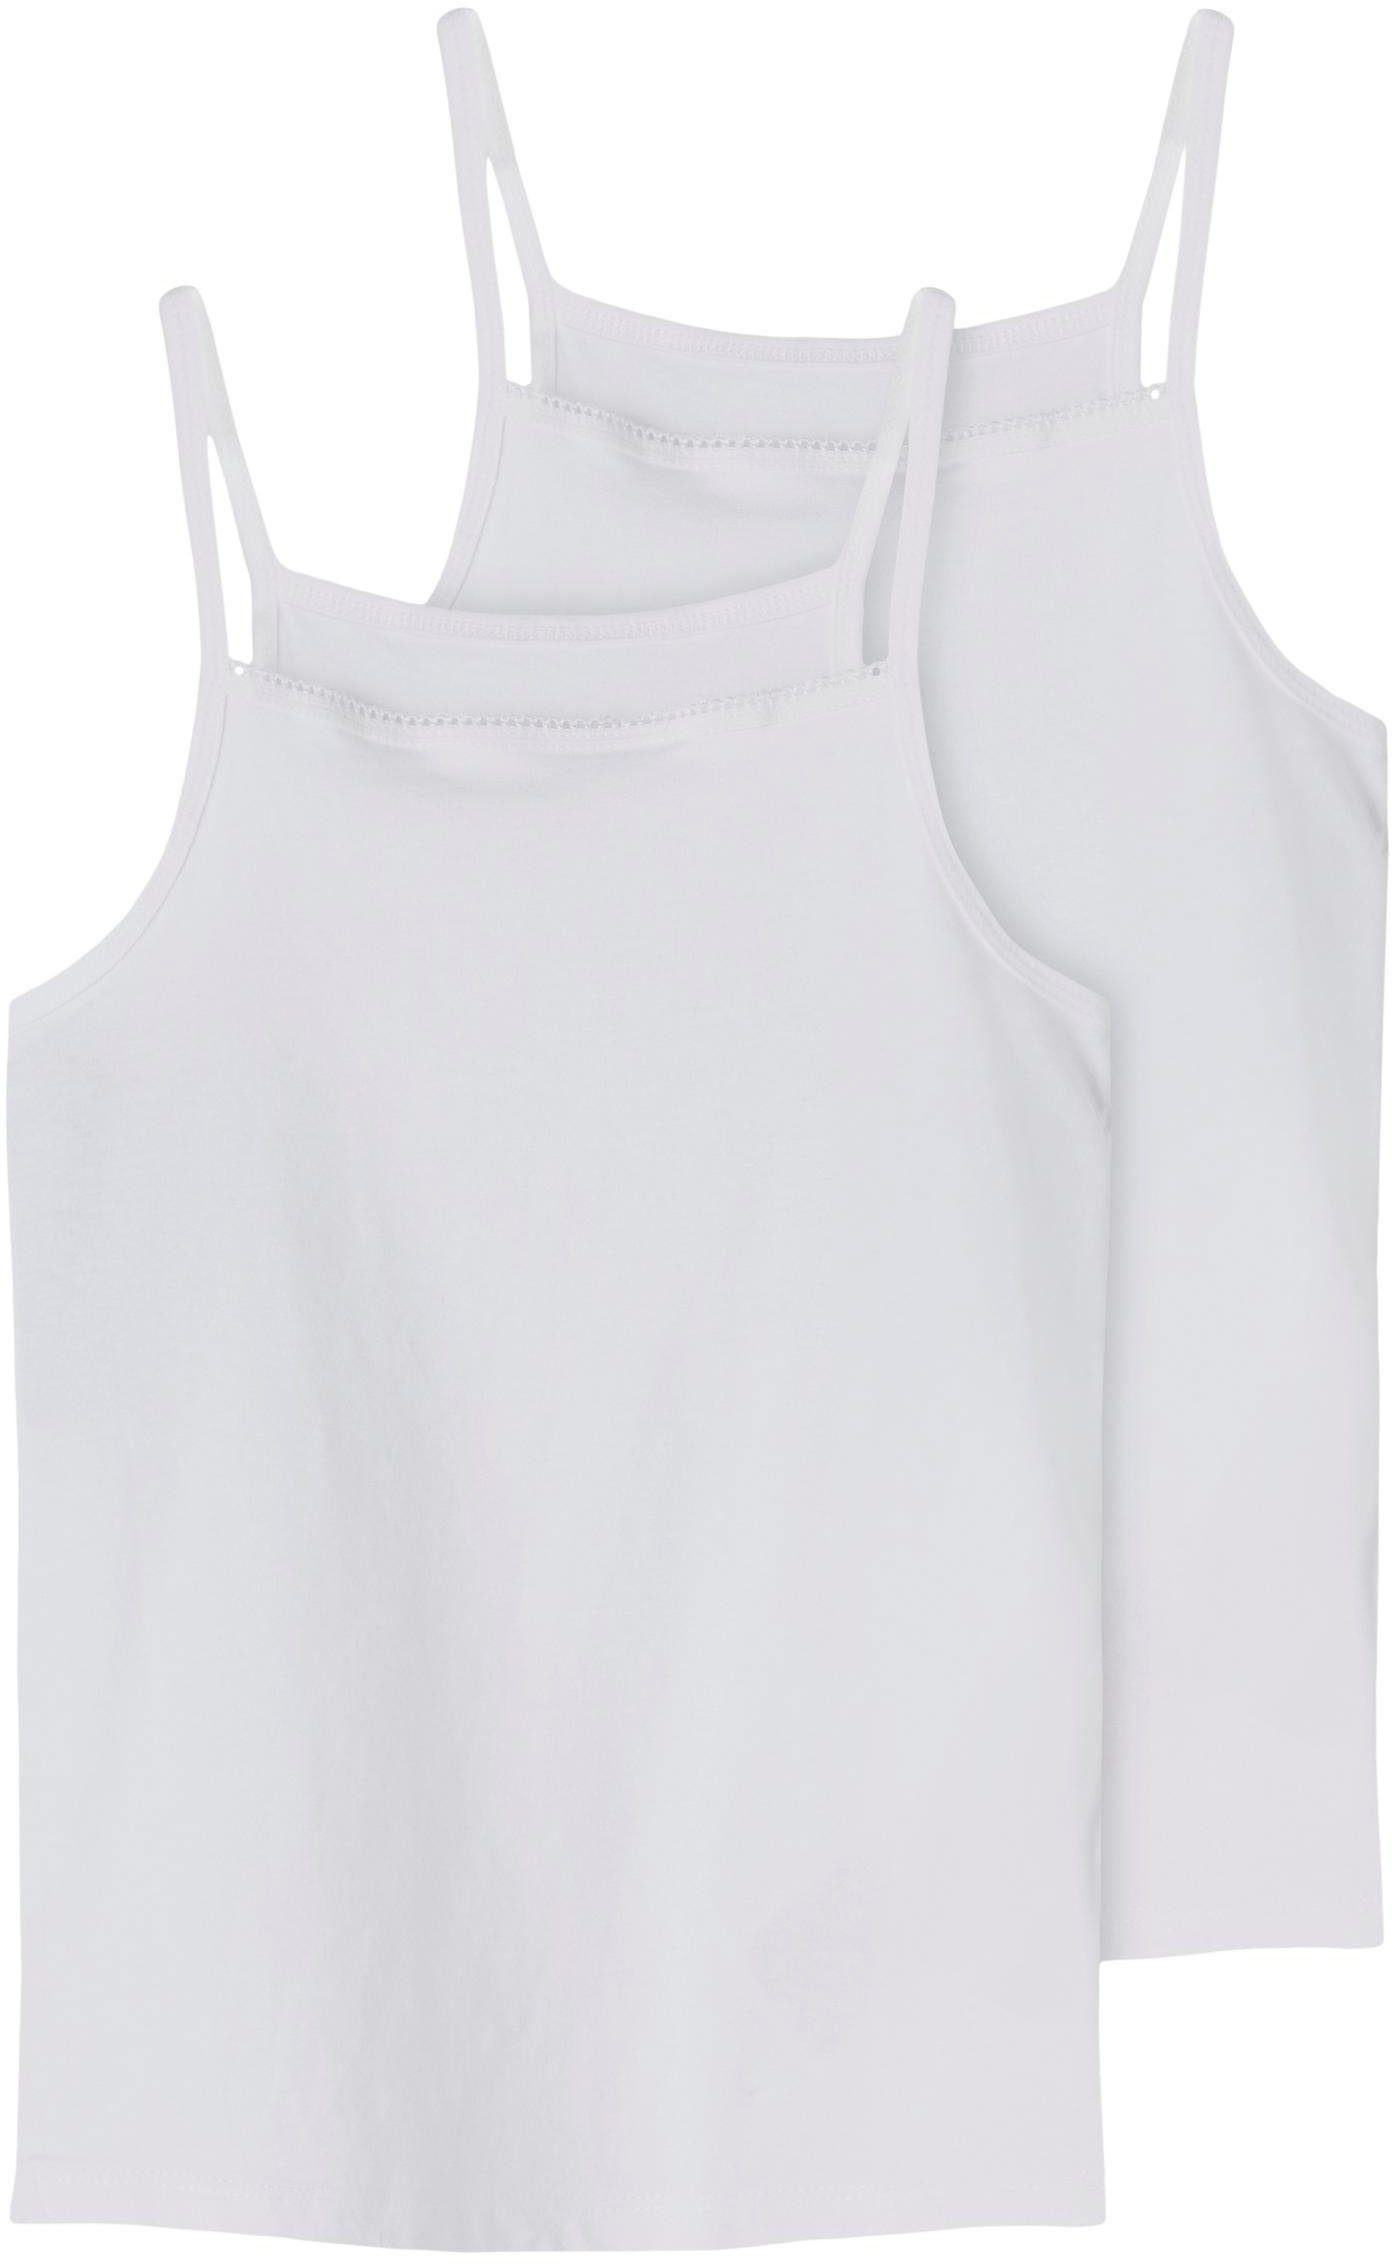 2-St) Name Unterhemd It (Packung, bright white